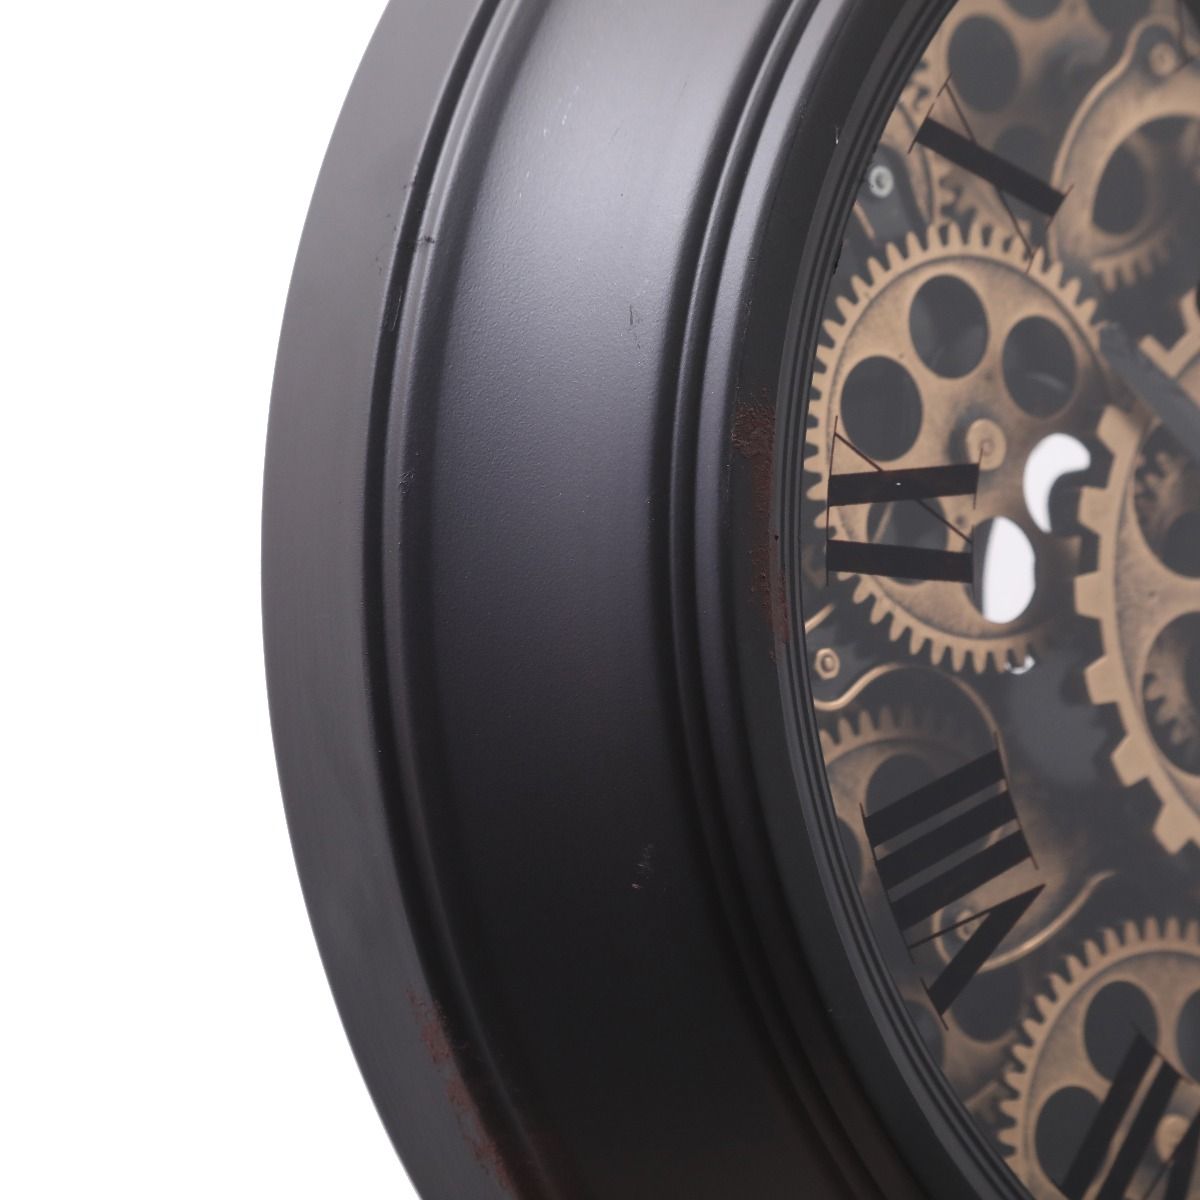 Industrial/vintage-inspired clock range - MODEL 024